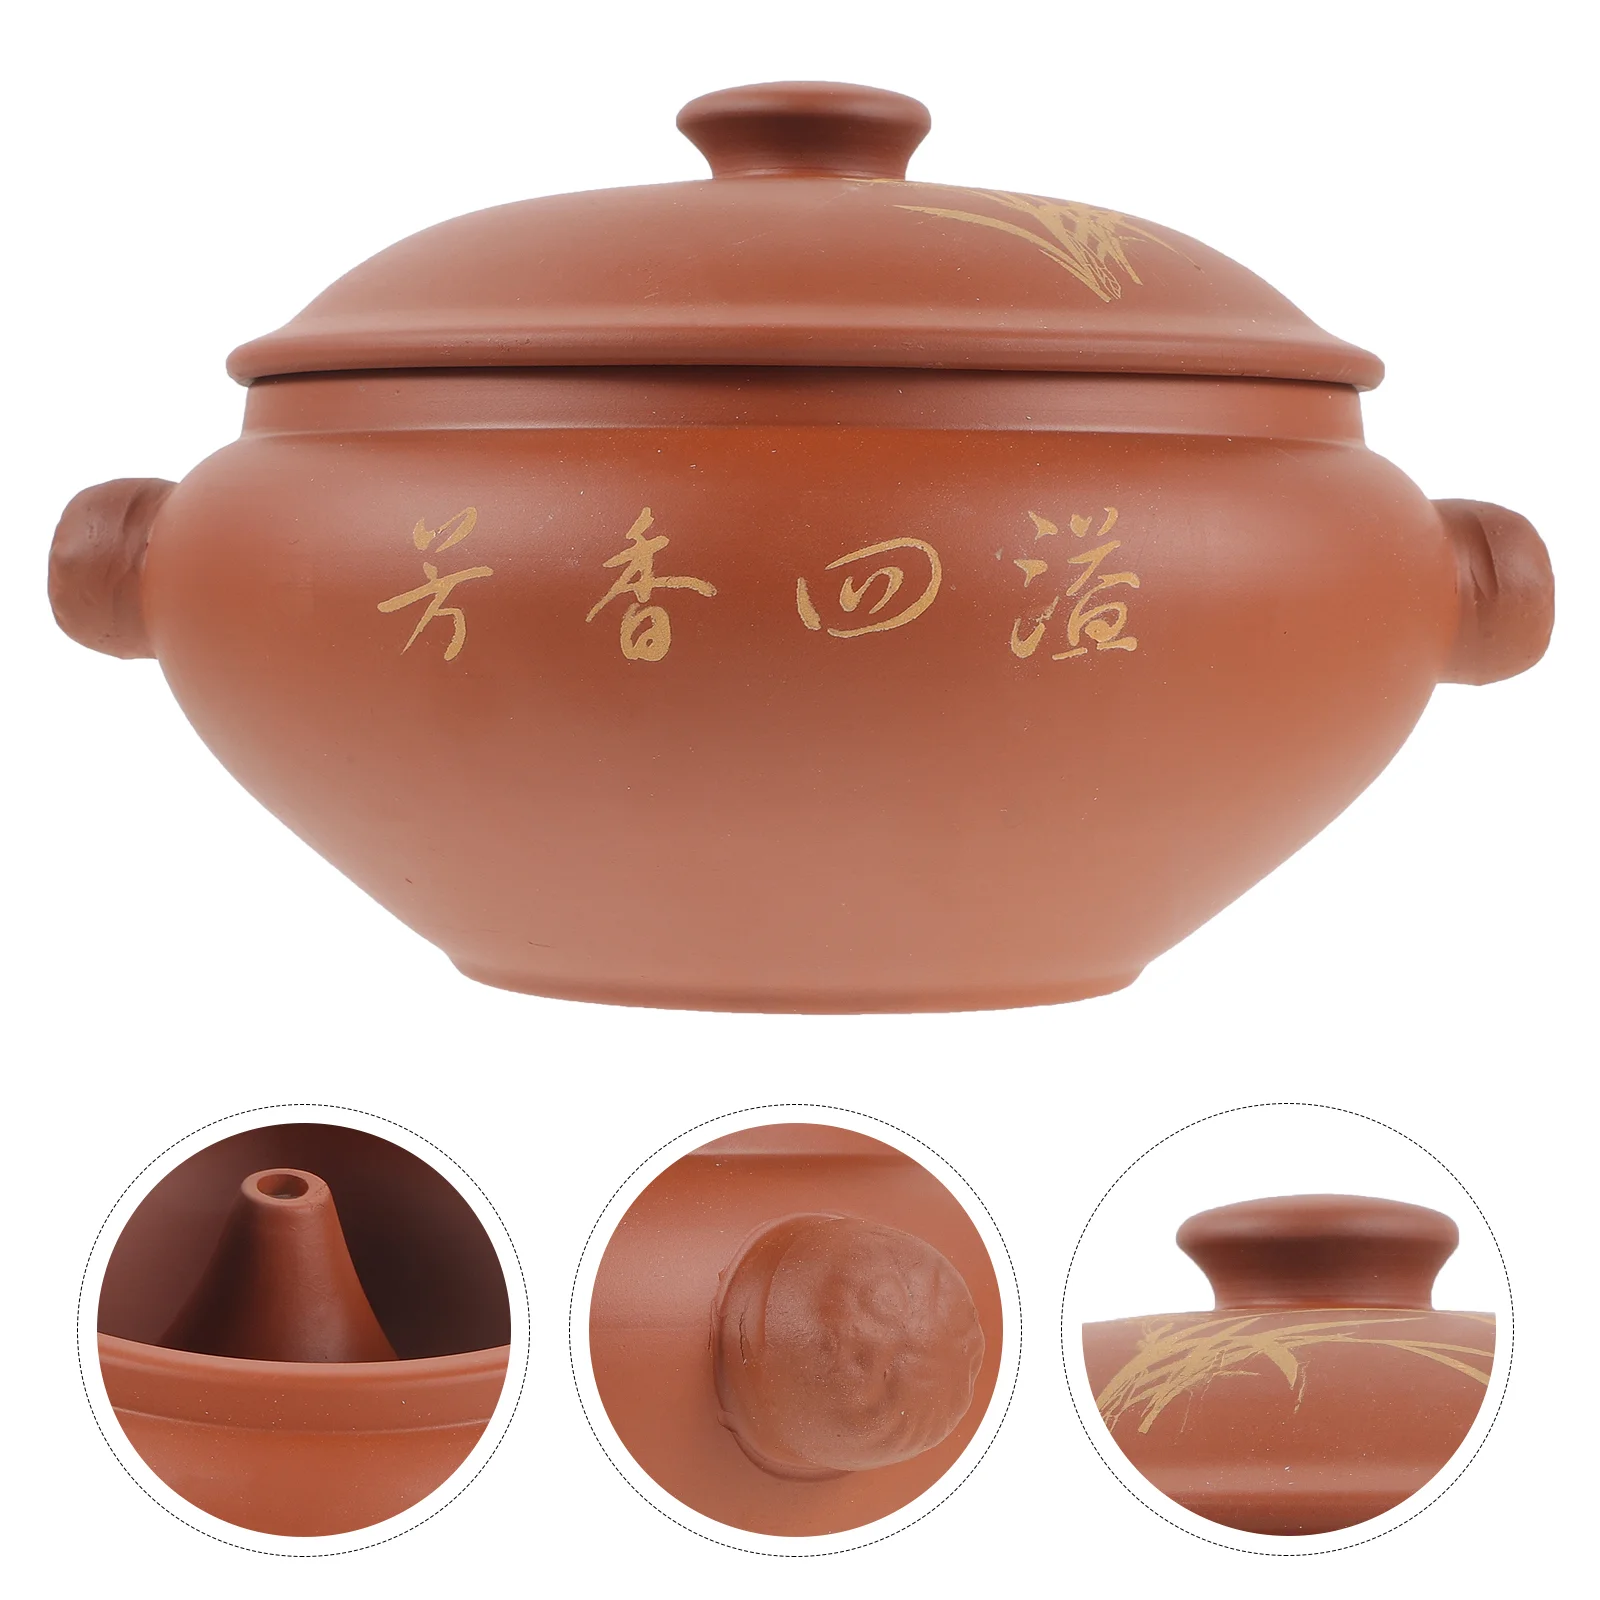 

Clay Cooking Pots Soup Casserole Ceramic Steam Cooker Utensils Cookware Steaming Ceramics